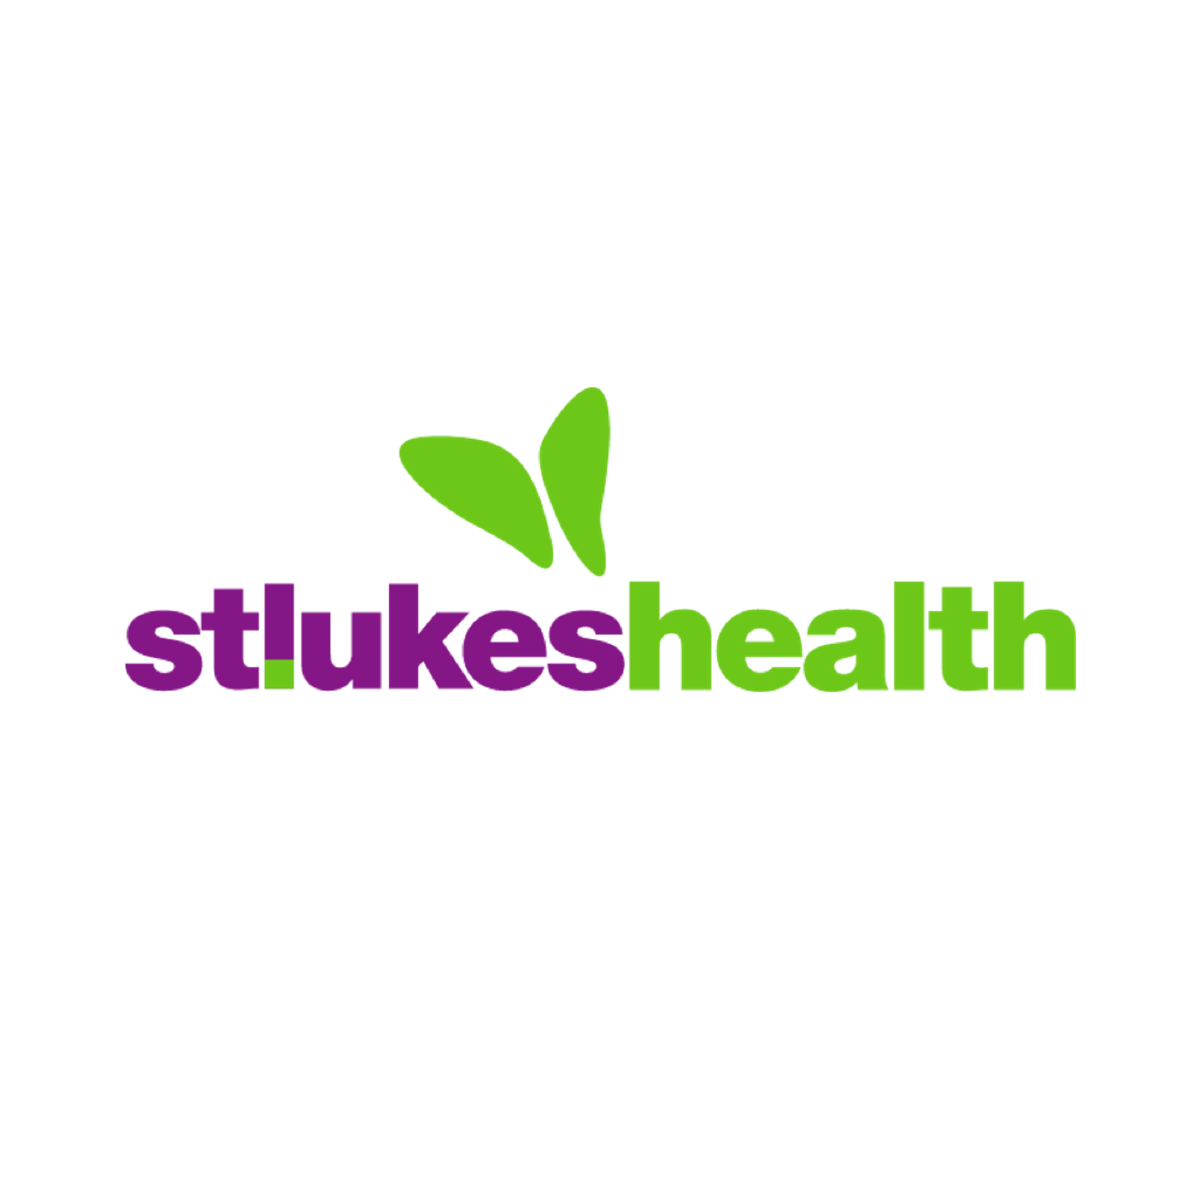 st-lukes-health.png